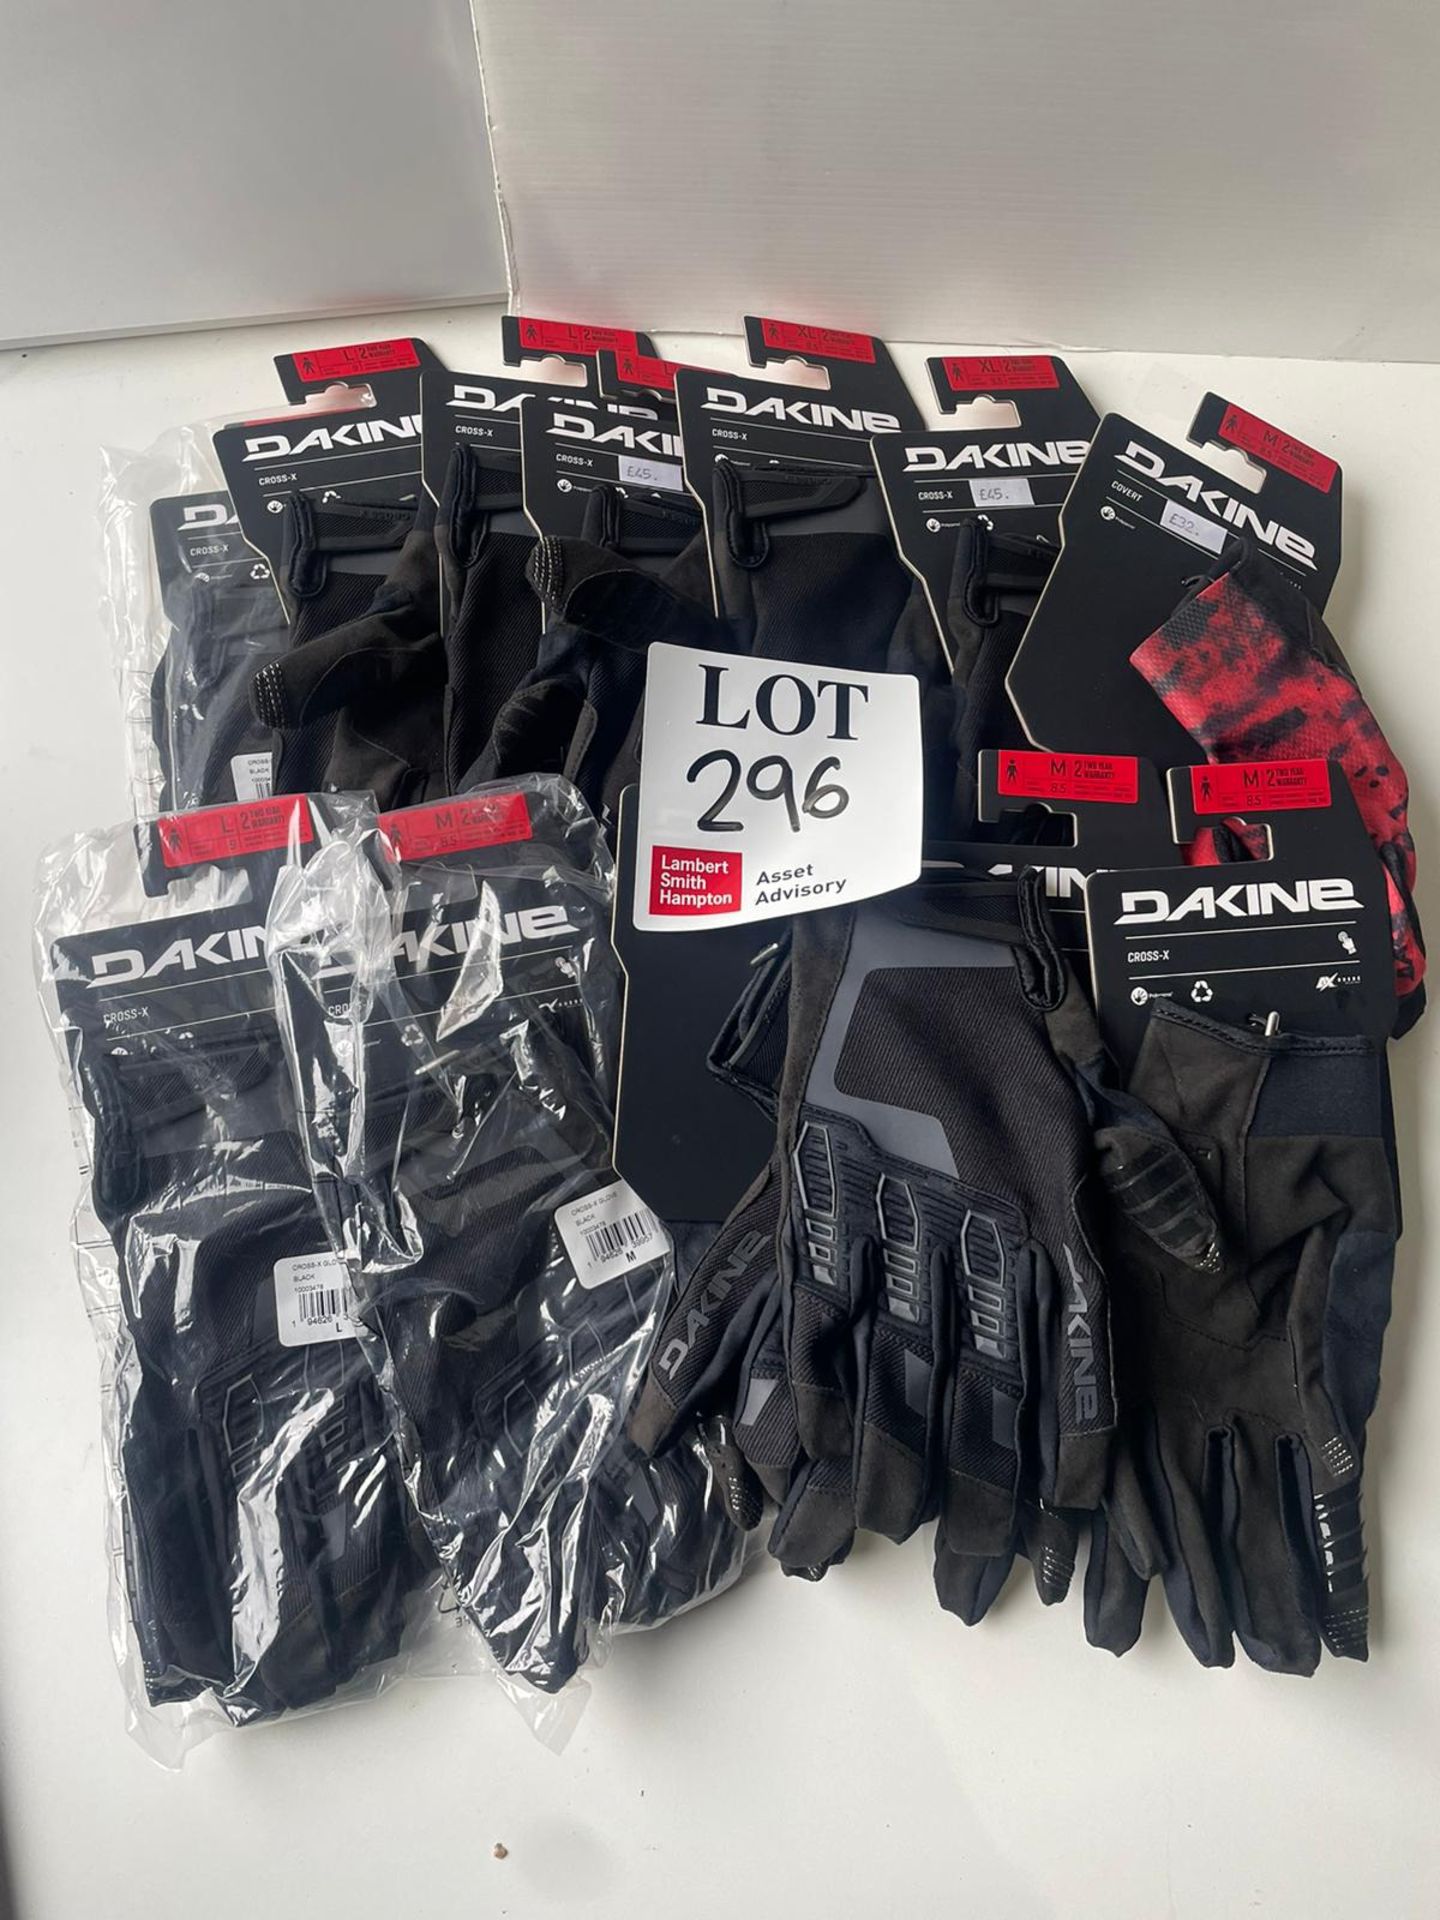 Twelve Dakine assorted bike gloves